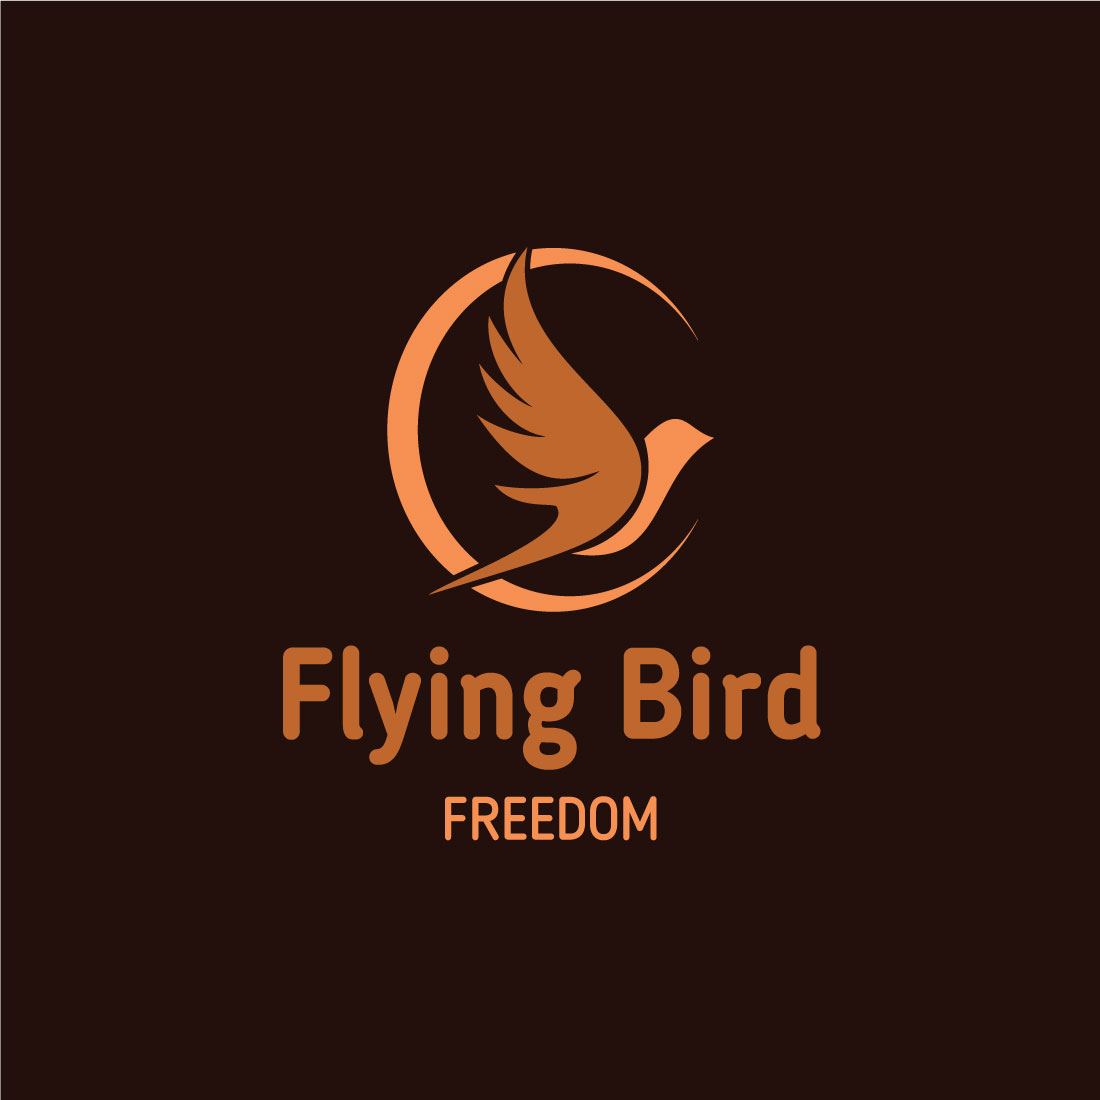 simple Flying bird logo design cover image.